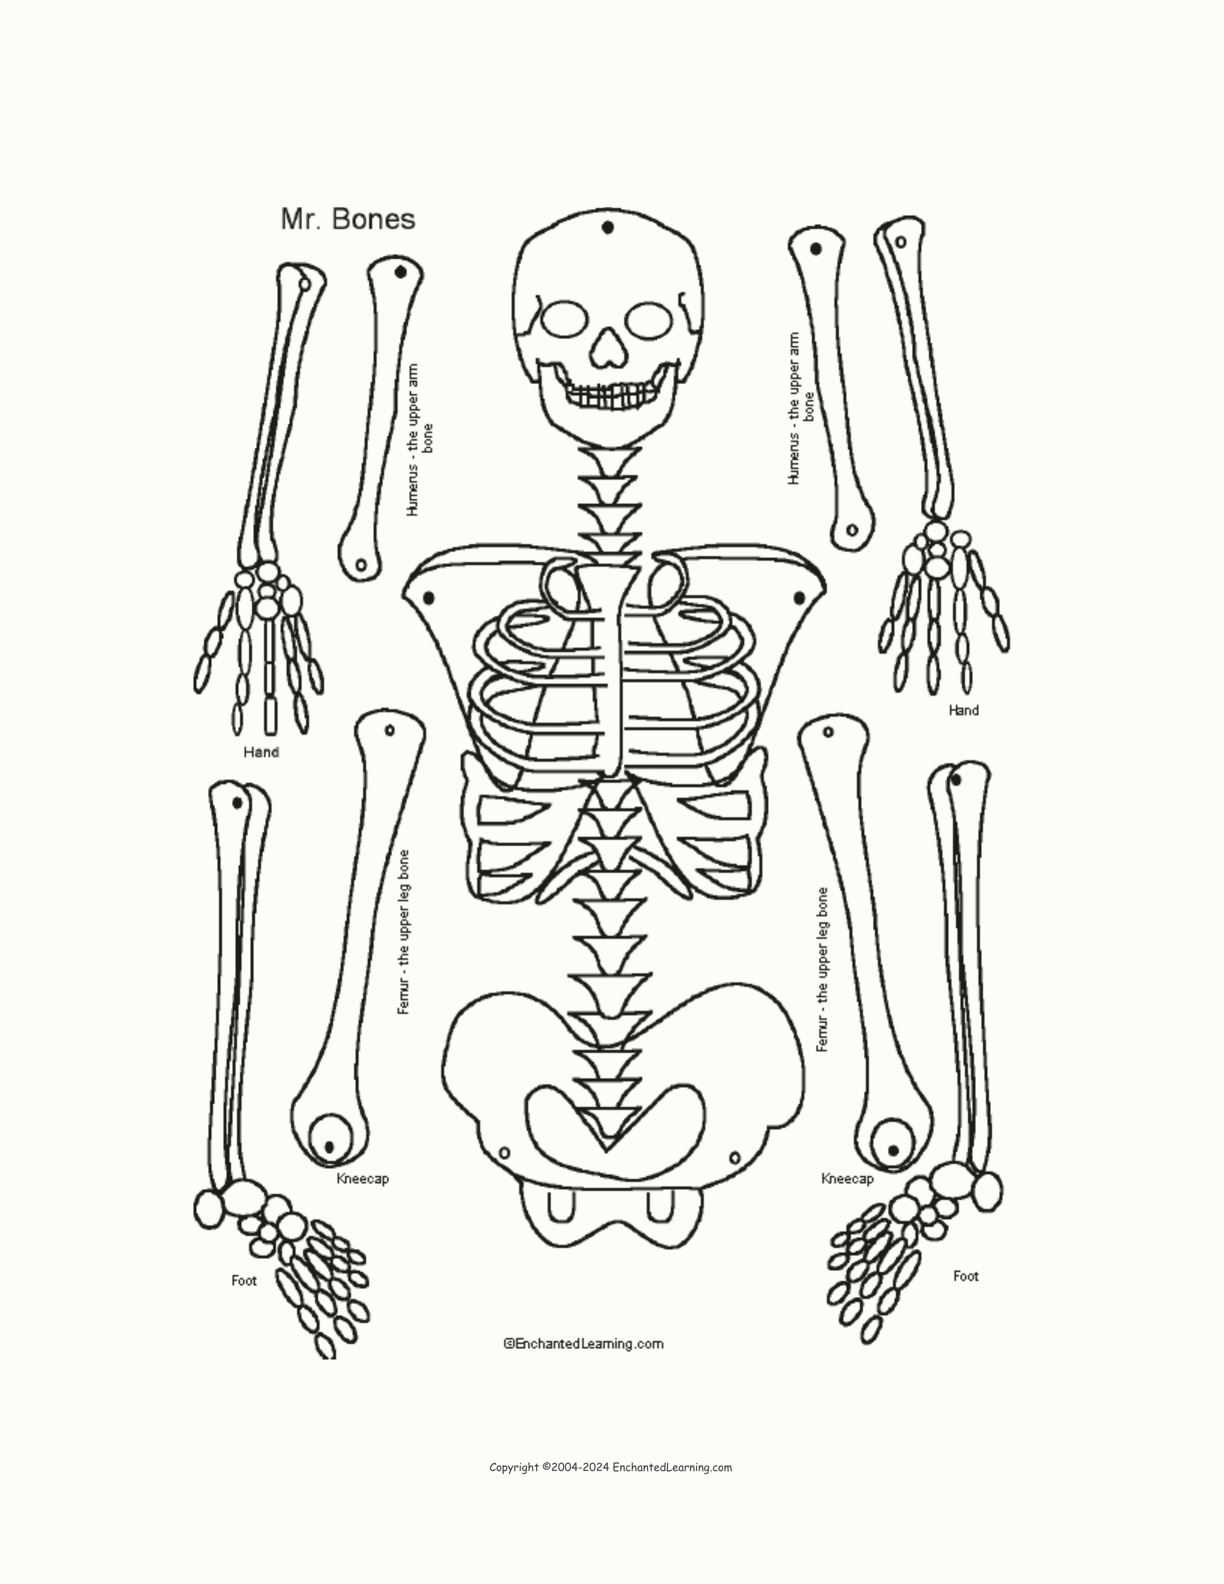 mr-bones-skeleton-craft-template-enchanted-learning